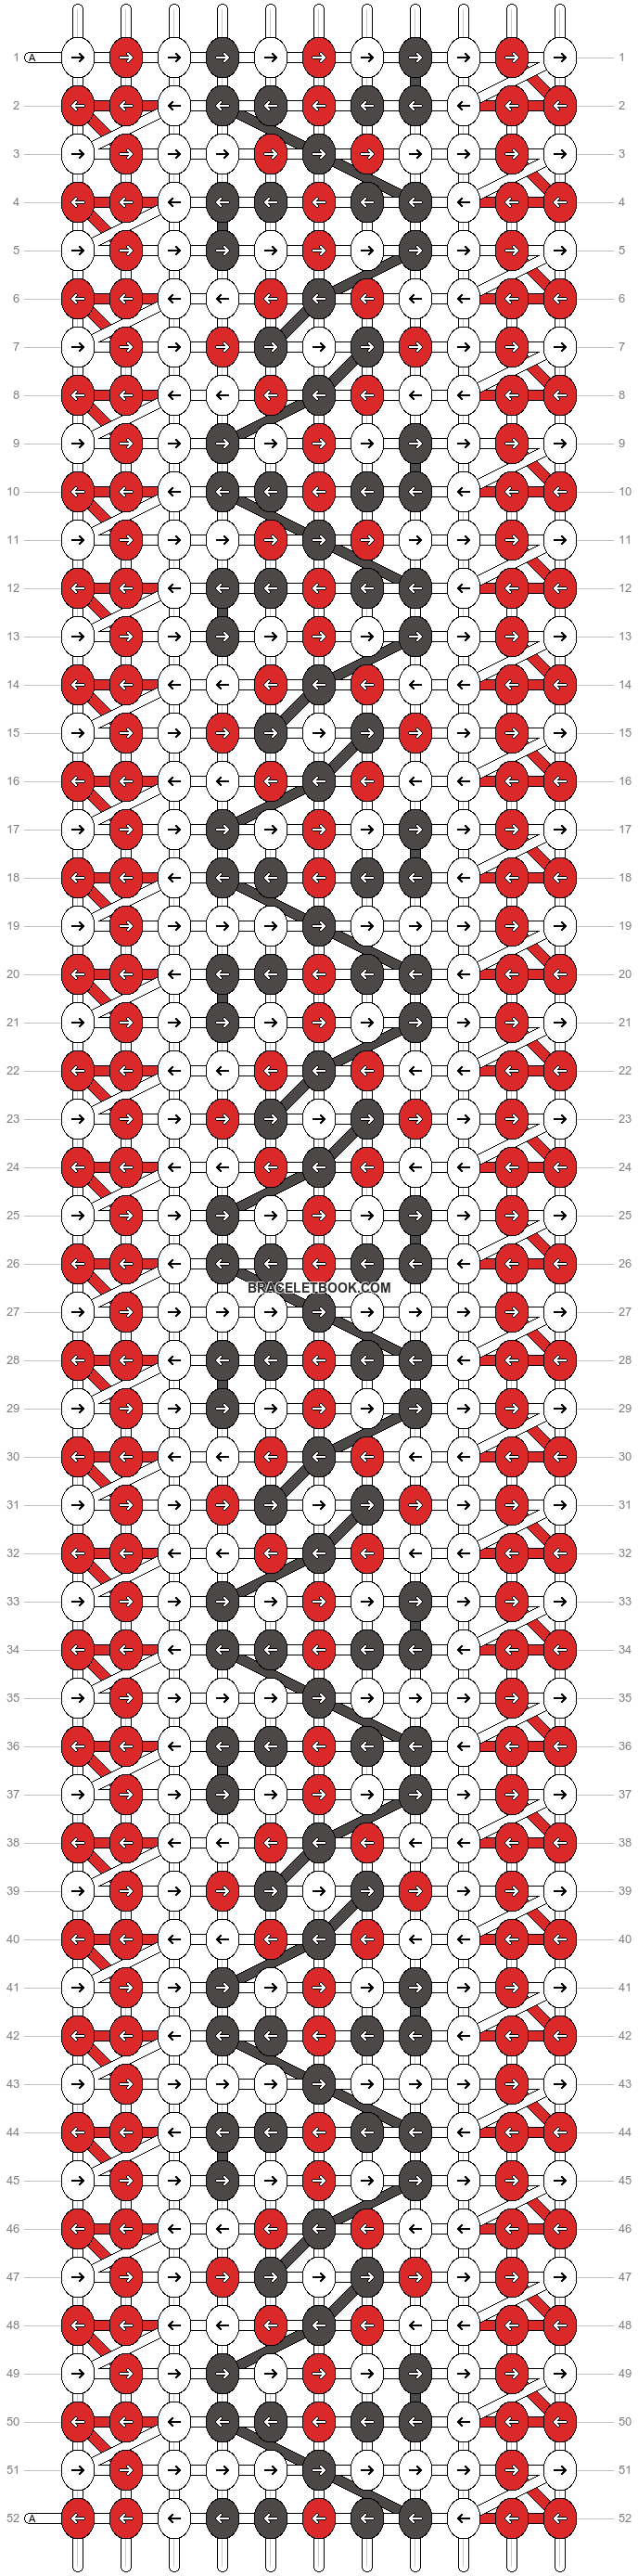 Alpha pattern #18124 pattern